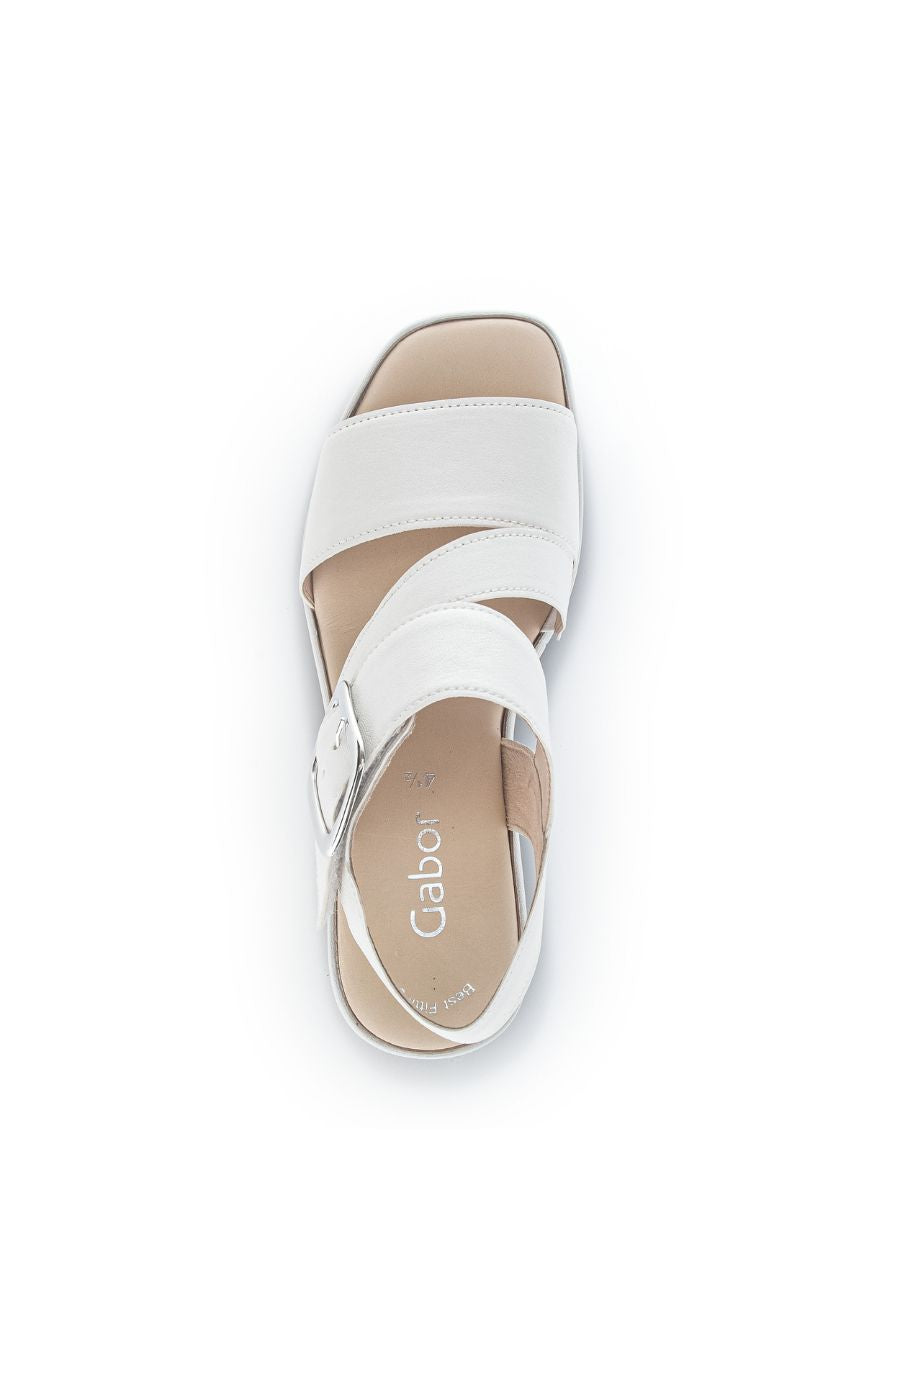 Gabor Buckle Wedge Sandal in White